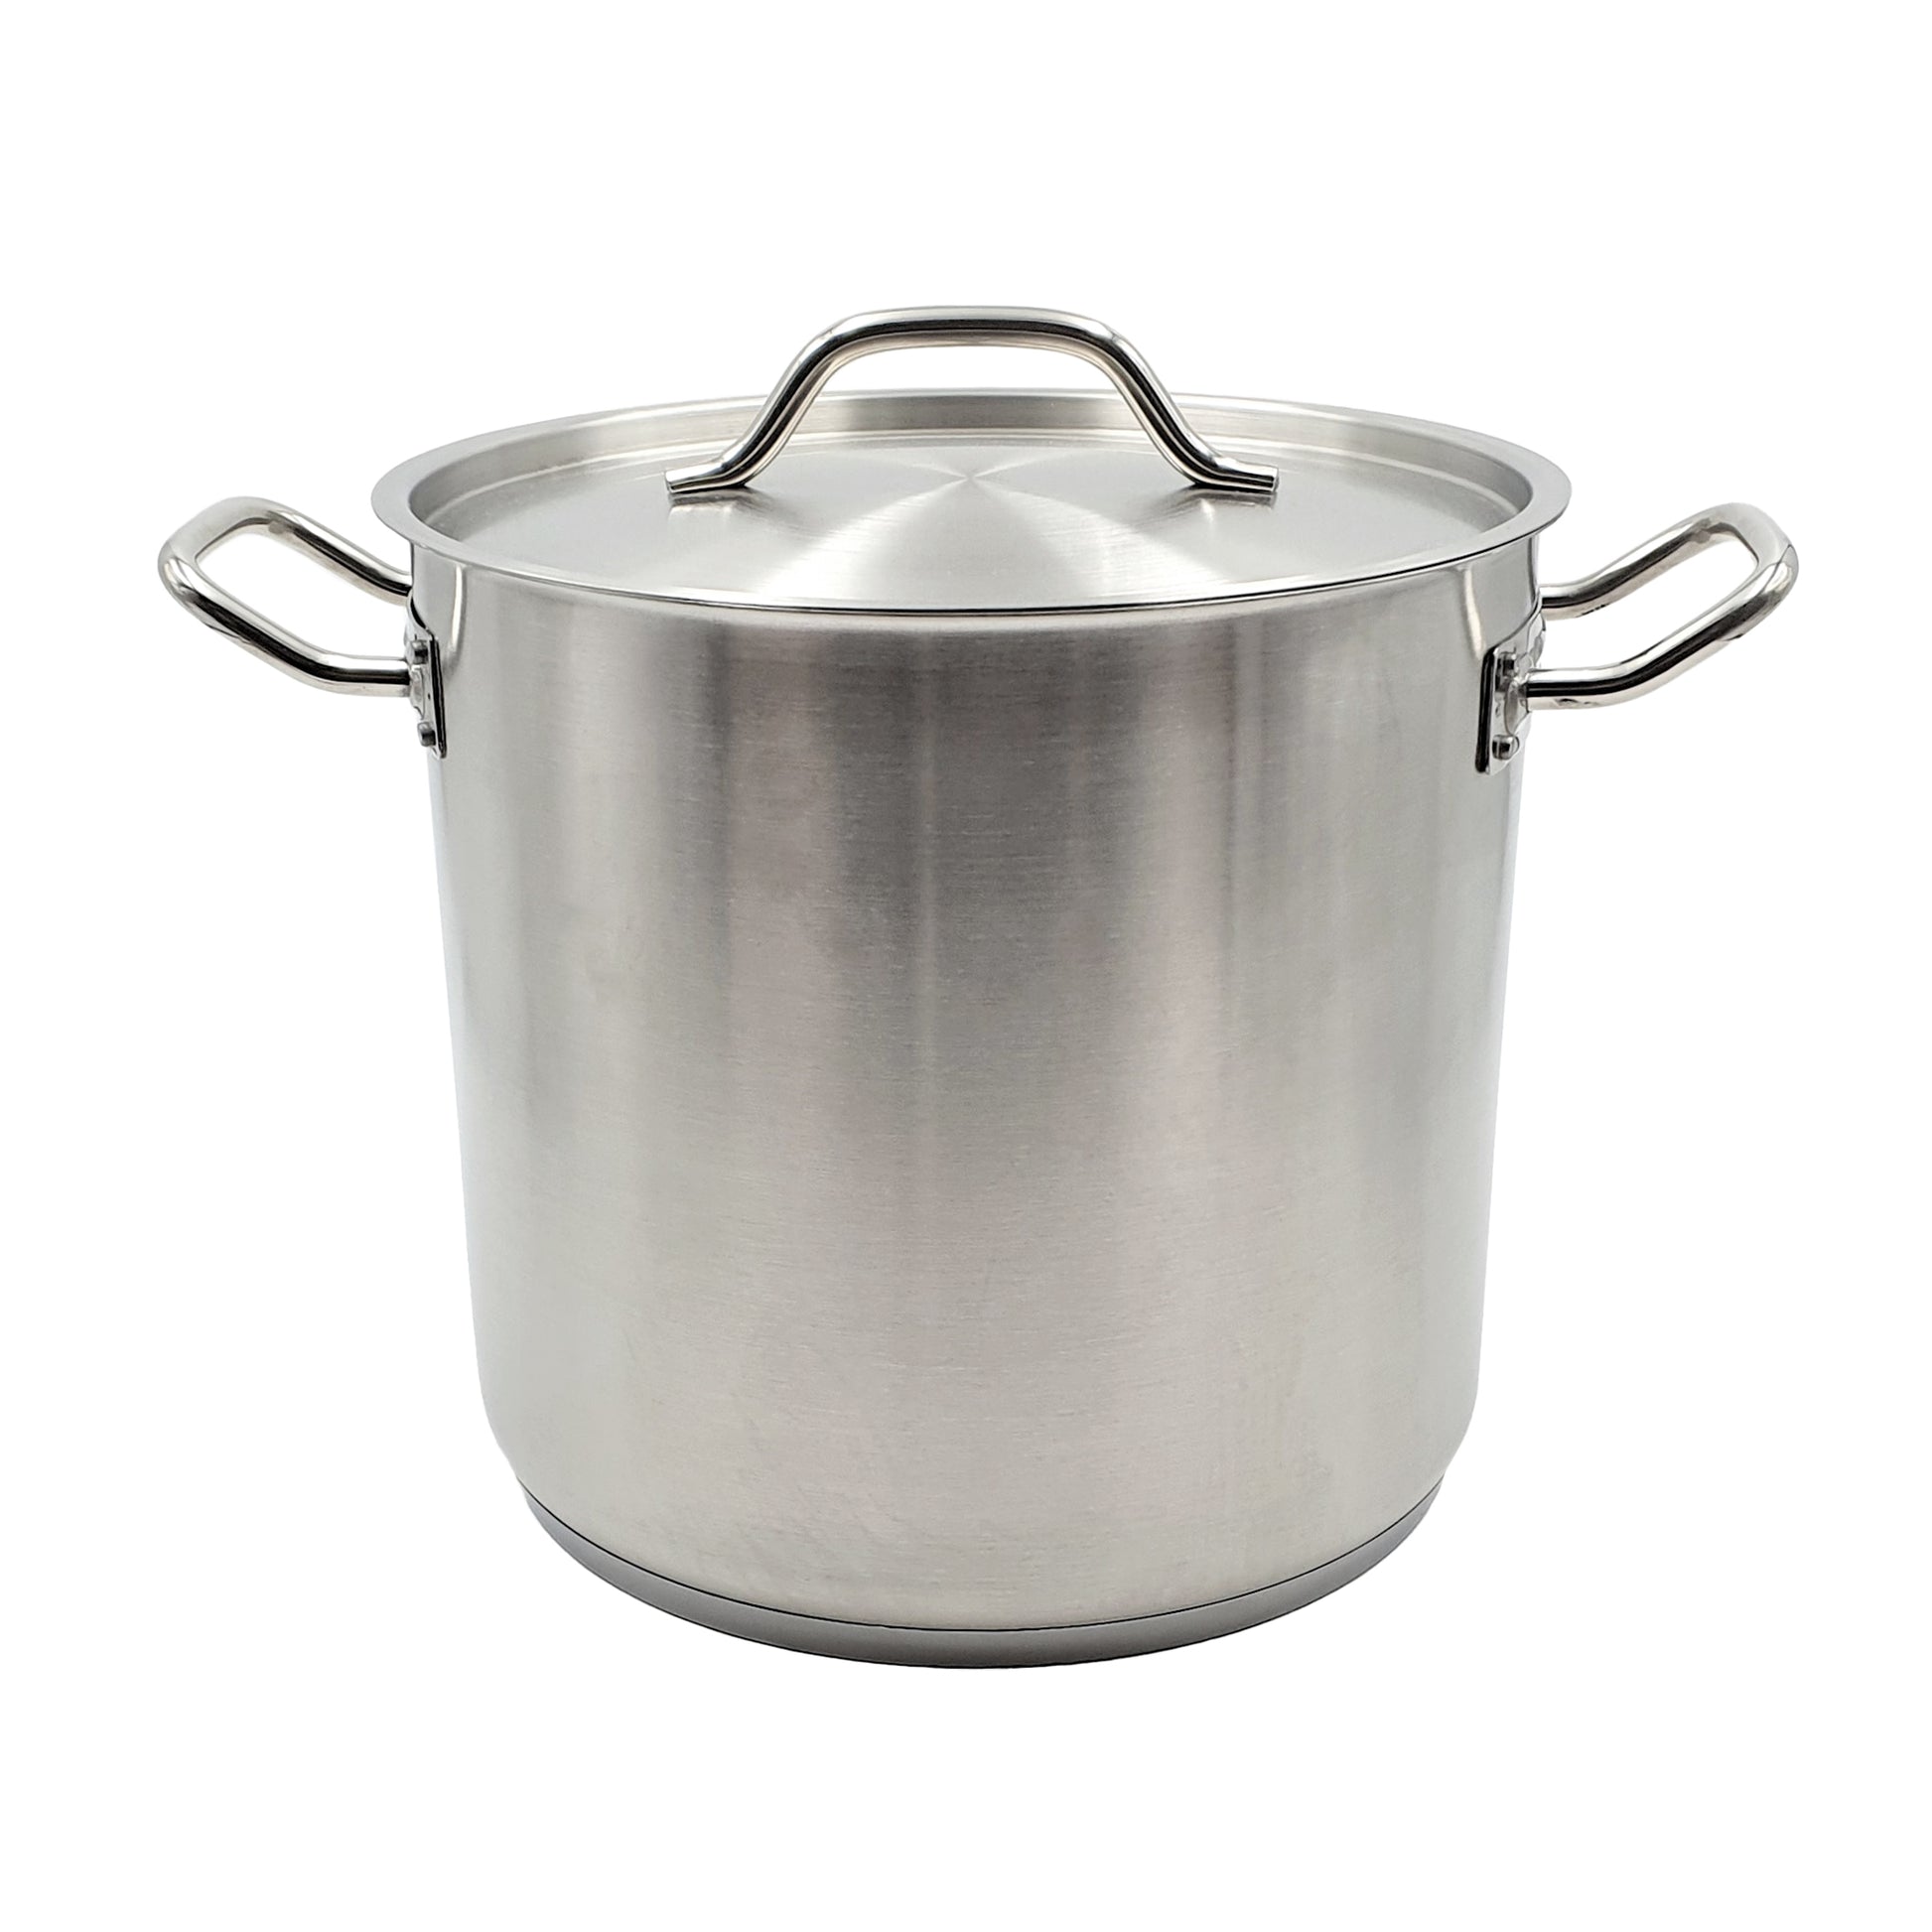 Italian Made 80 litre aluminium stock pot with lid used for making tomato passata sauce.